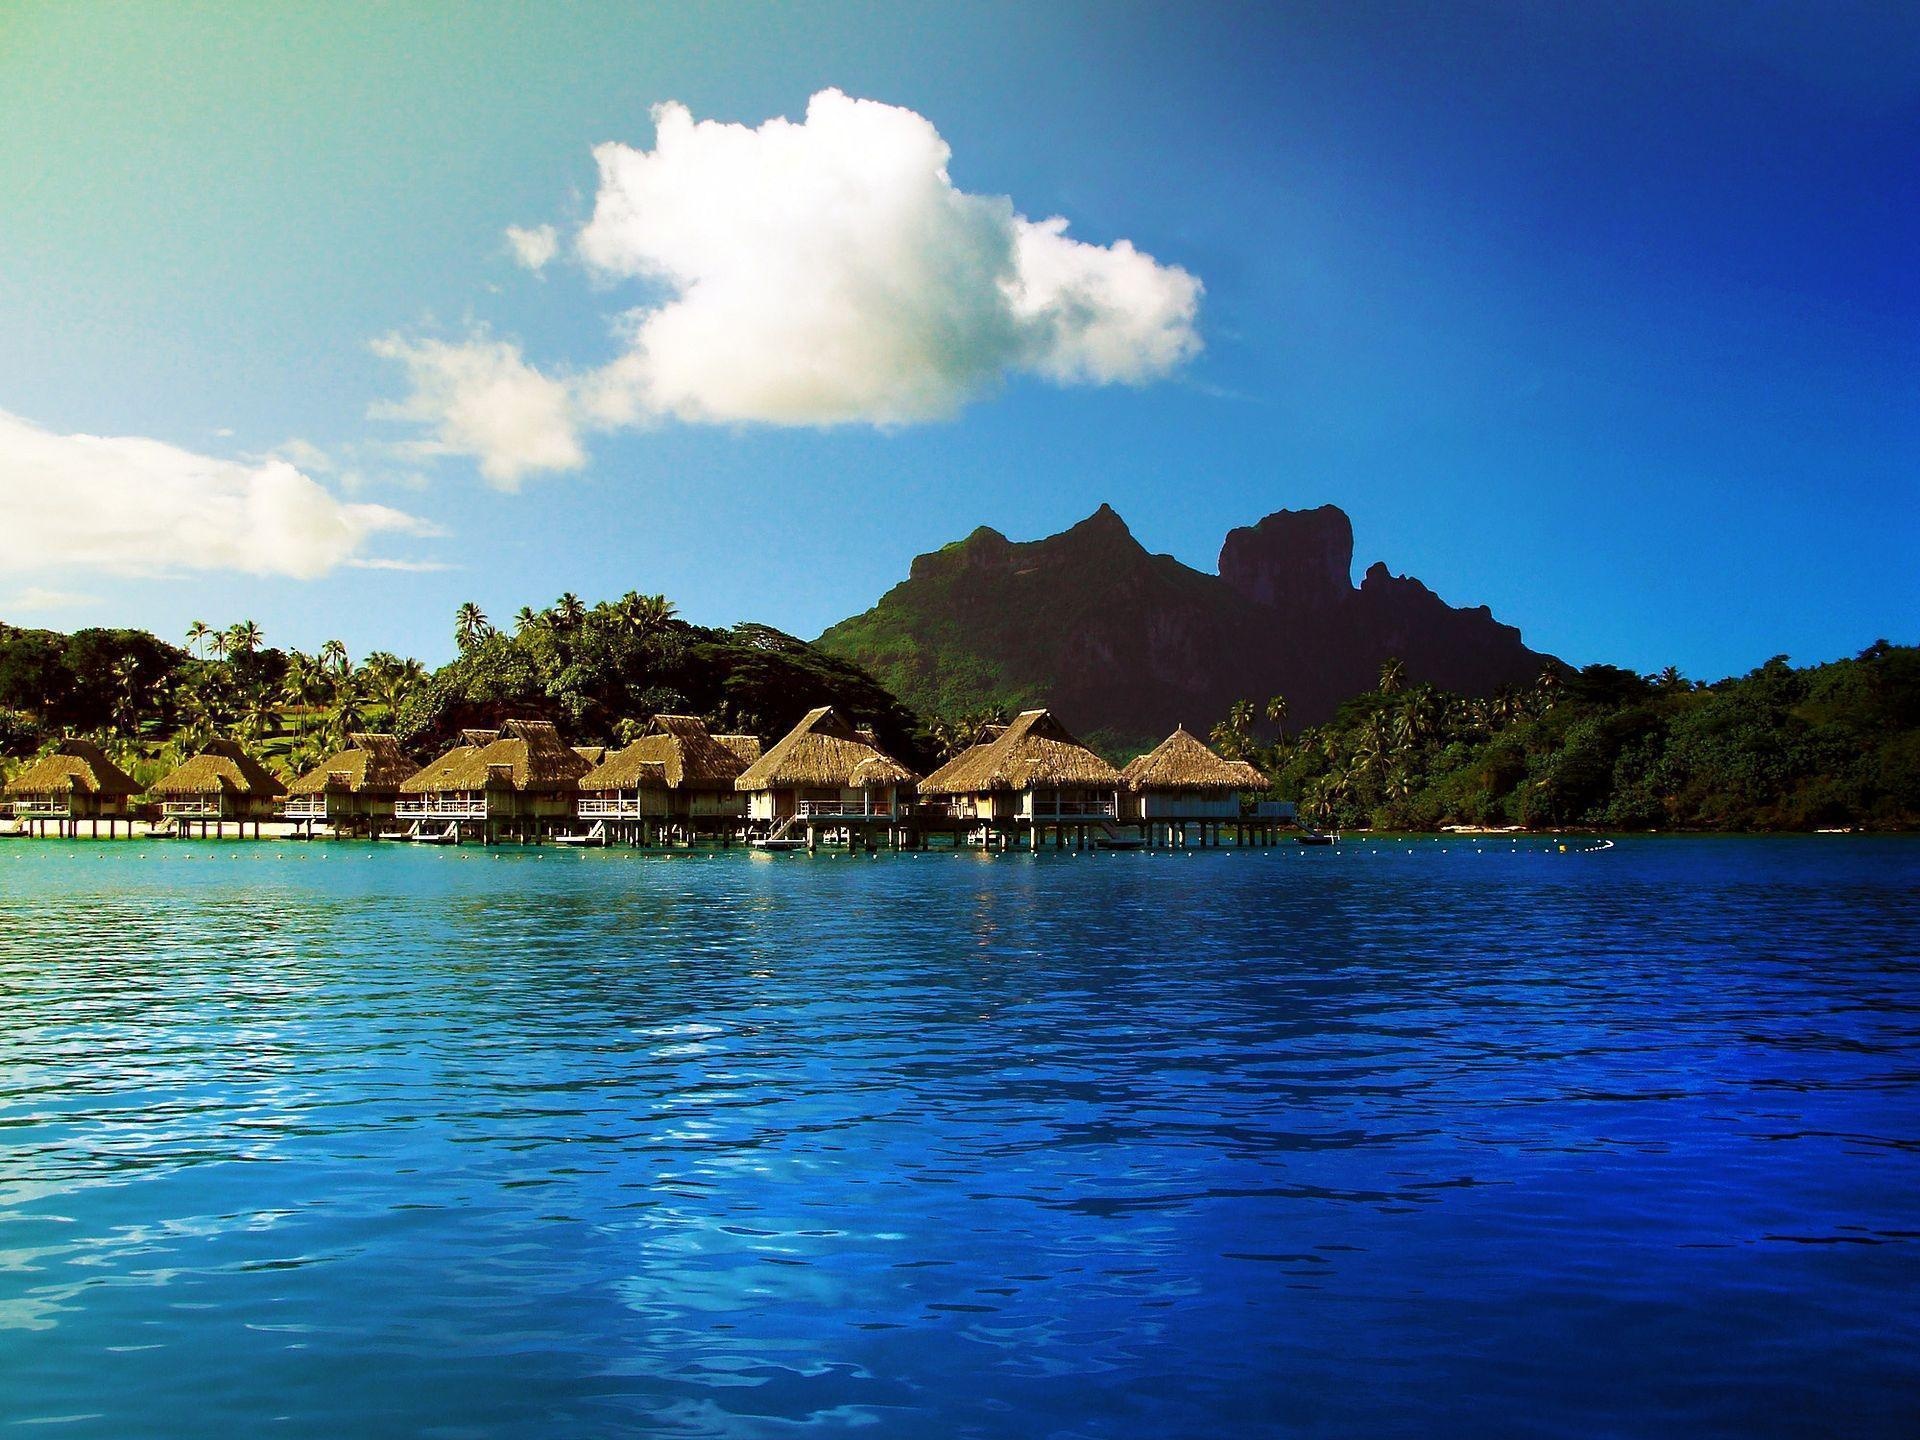 Bora Bora: The part of the Leeward Group of islands, Beach vacation destination. 1920x1440 HD Wallpaper.